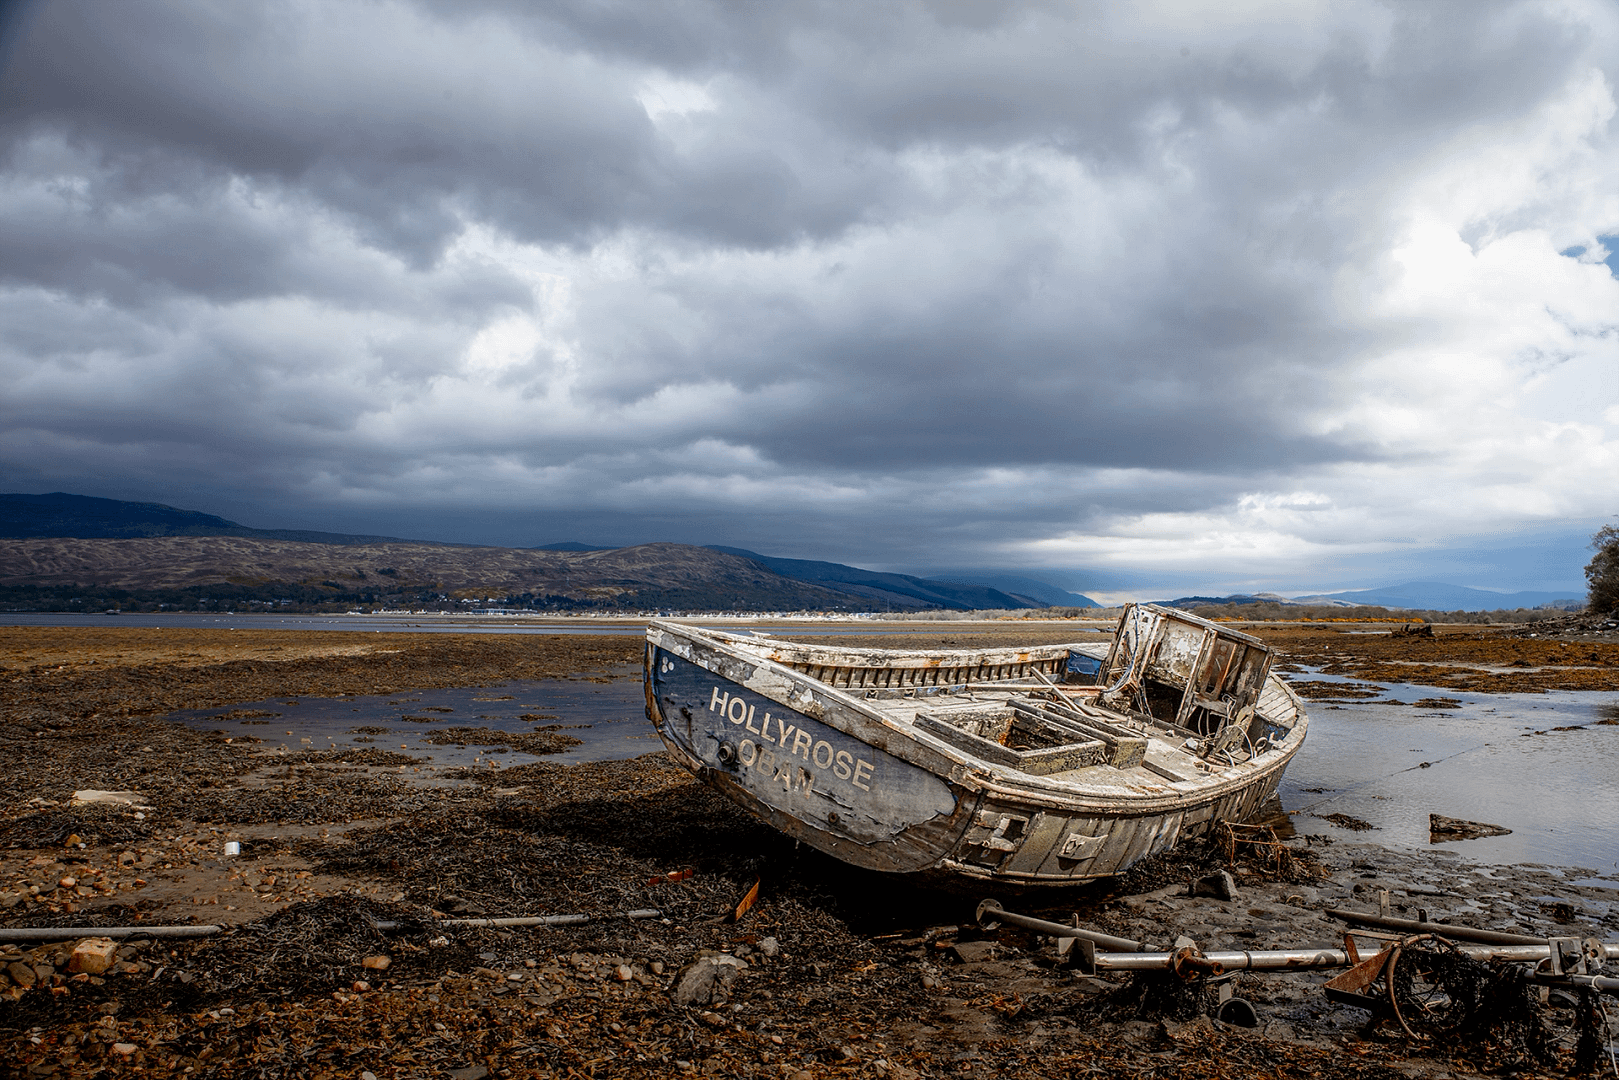 Shipwreck Photography